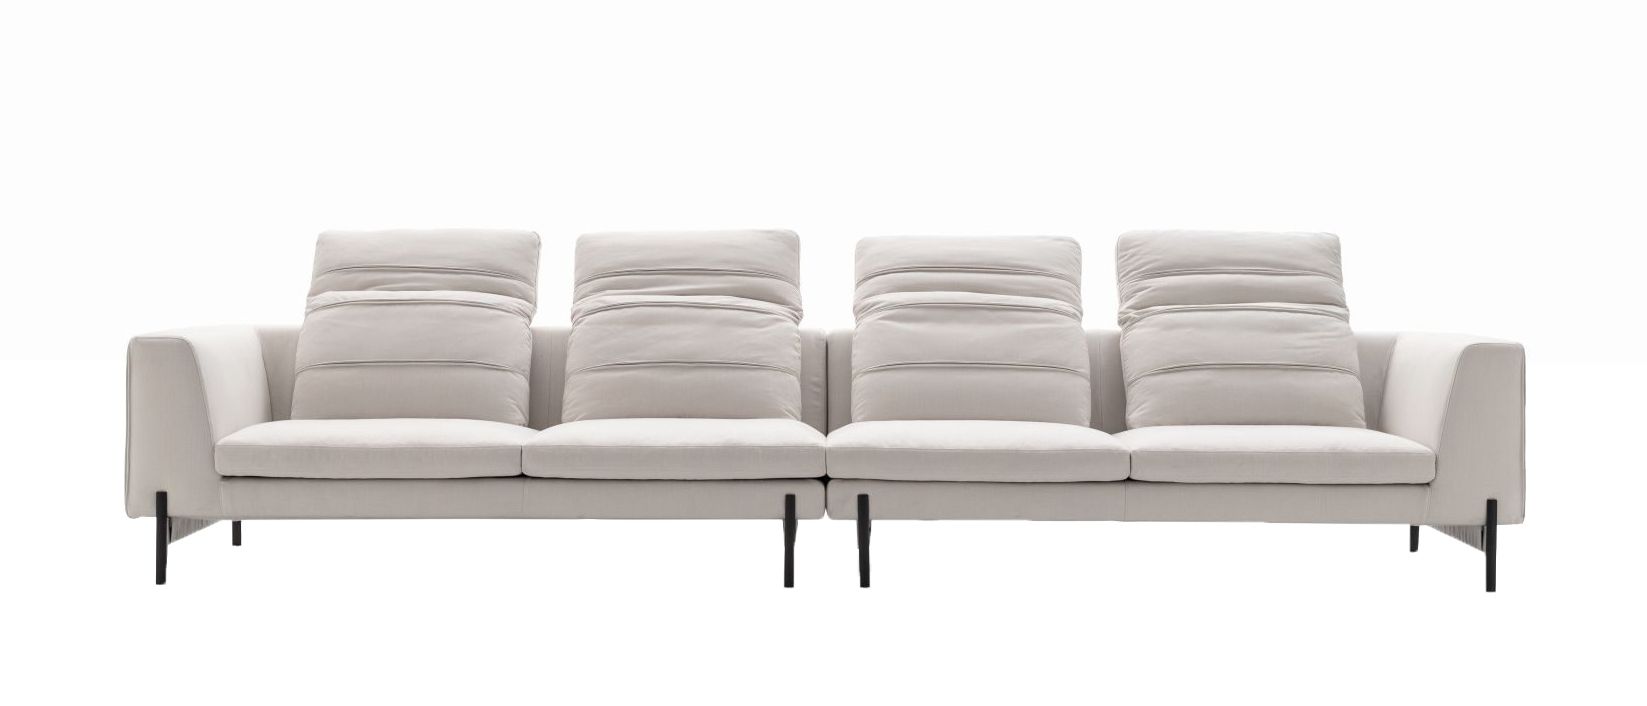 Sofa Kim Relax by Ditre Italia